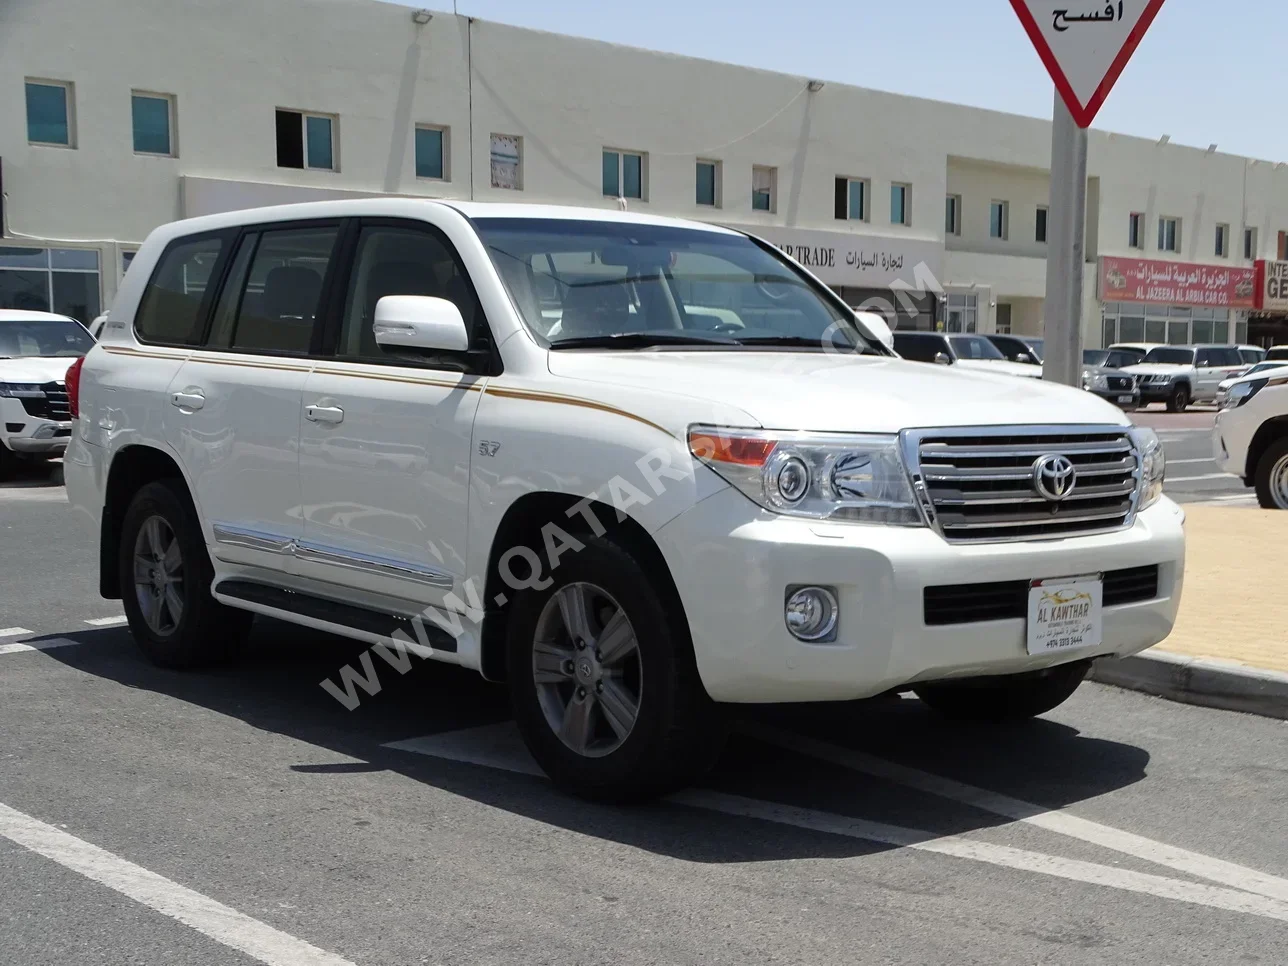 Toyota  Land Cruiser  VXR  2015  Automatic  296,000 Km  8 Cylinder  Four Wheel Drive (4WD)  SUV  White